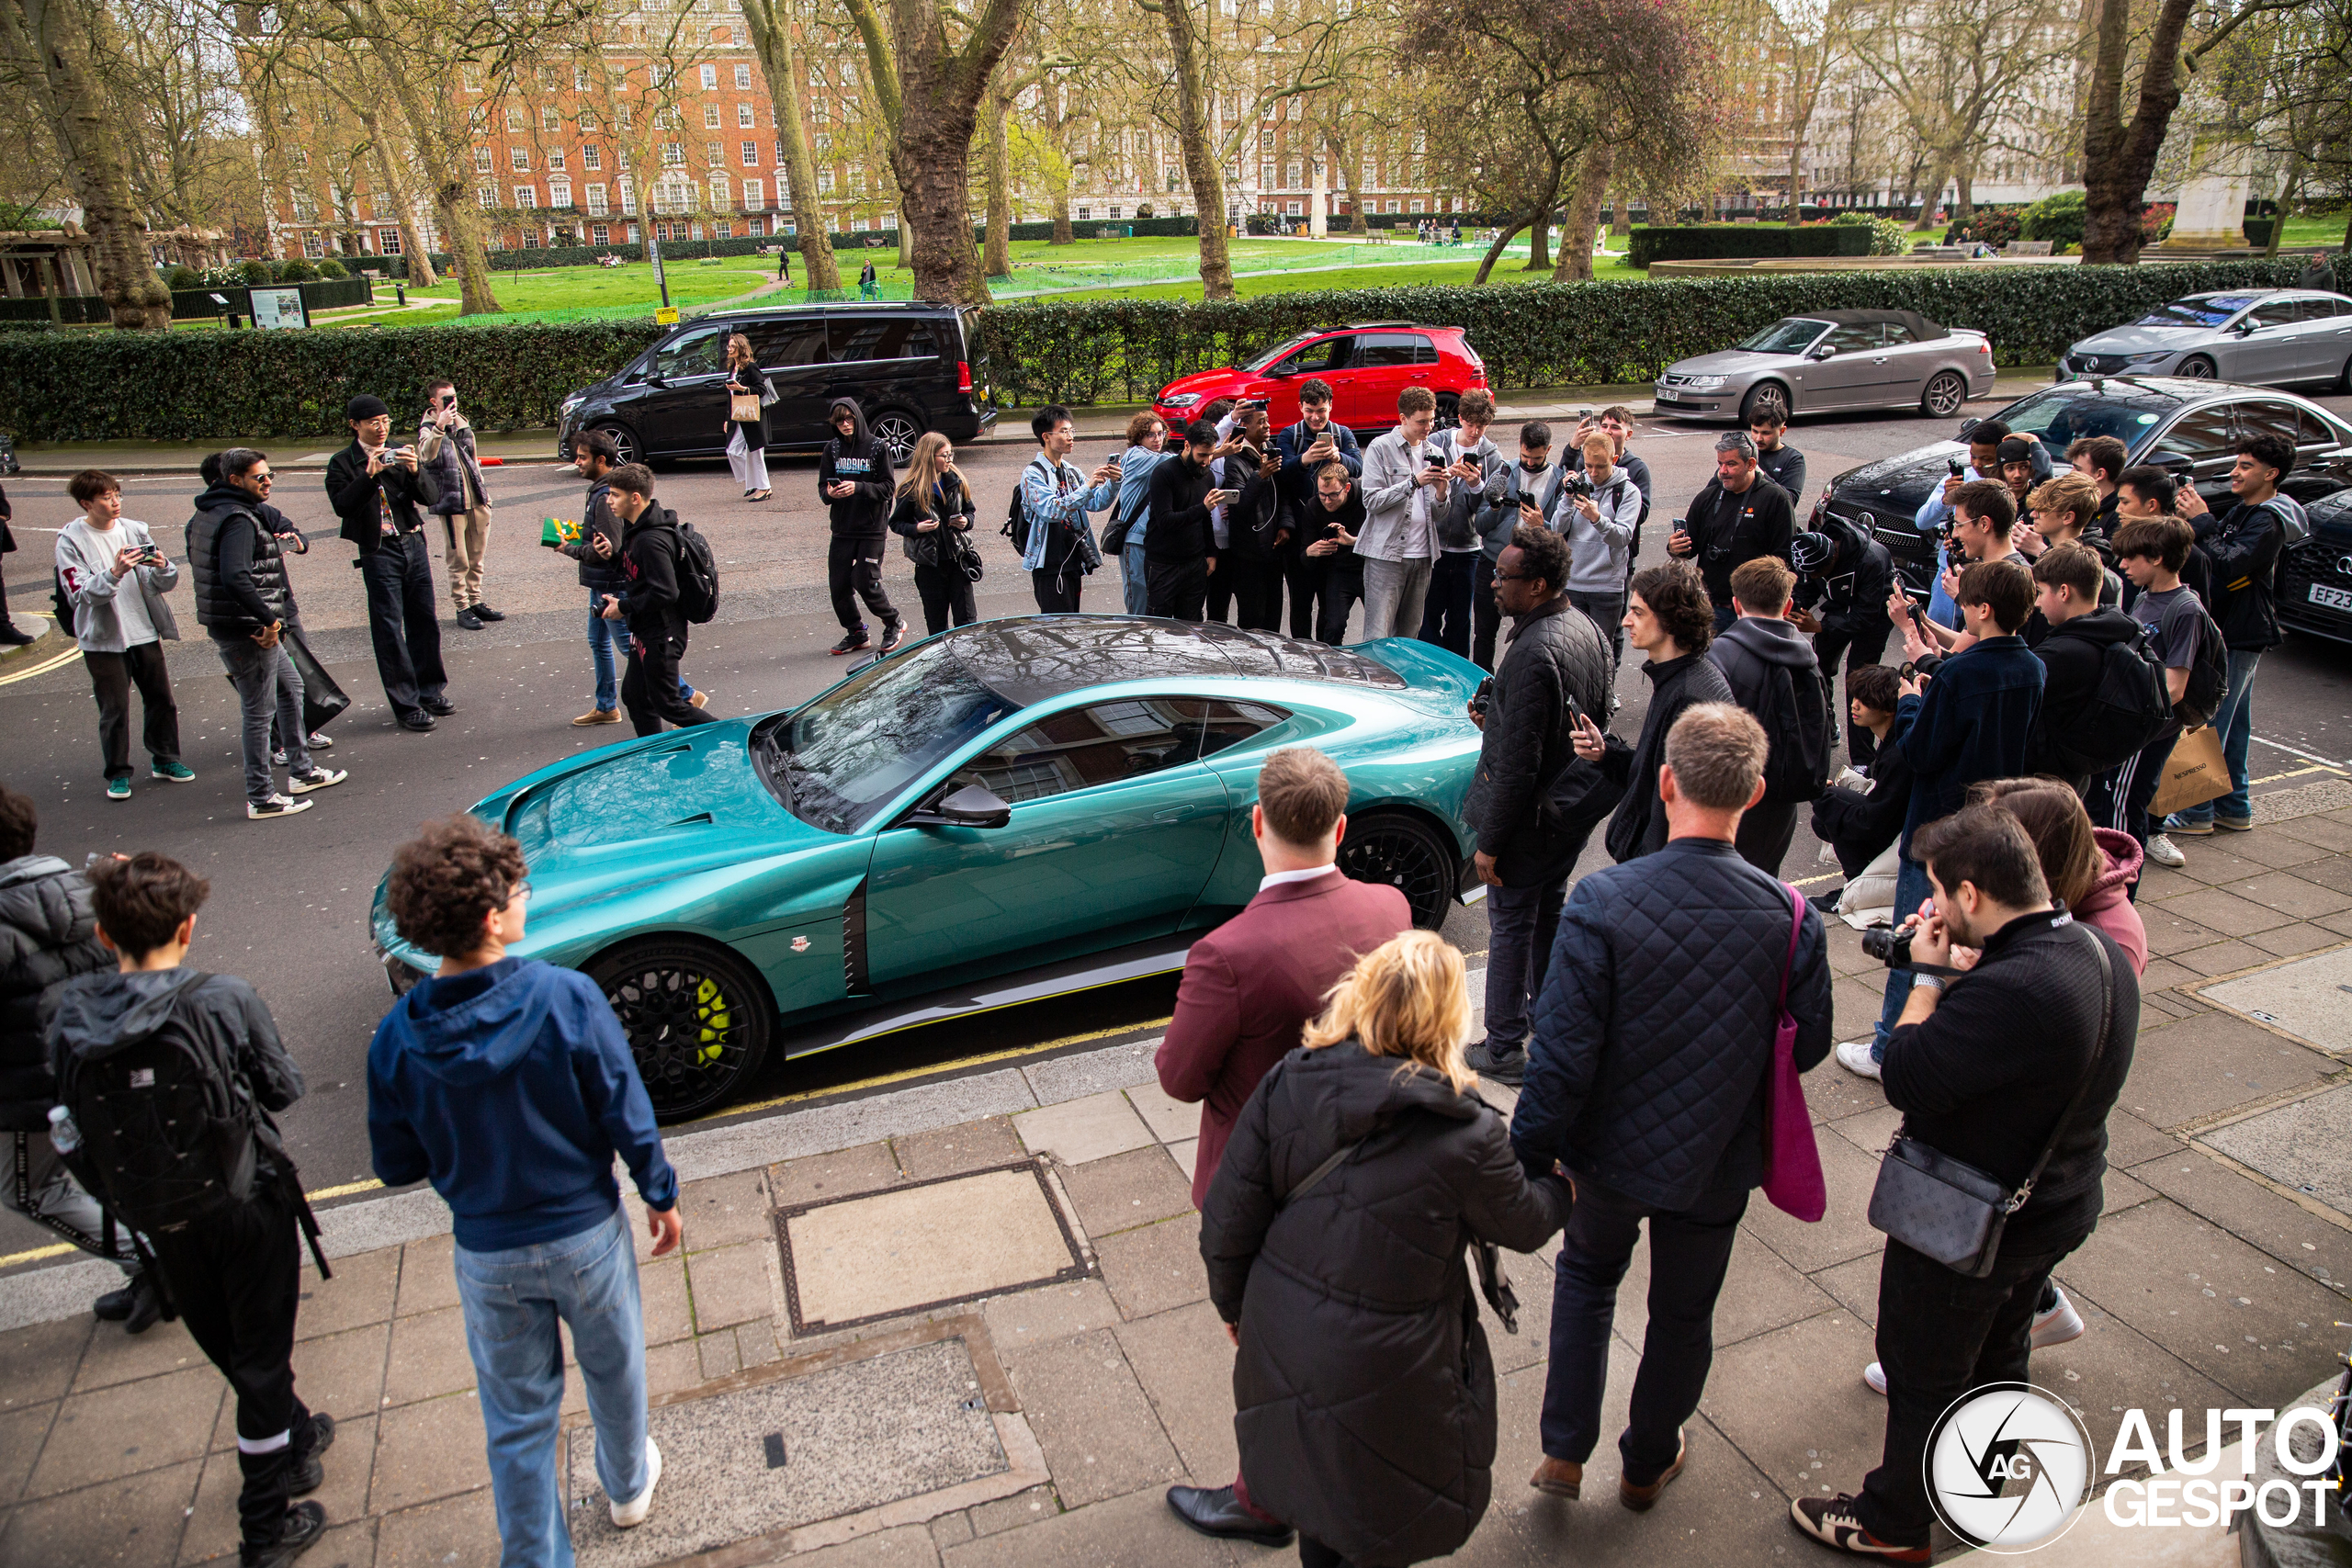 In full glory: Gordon Ramsay's Aston Martin Valour